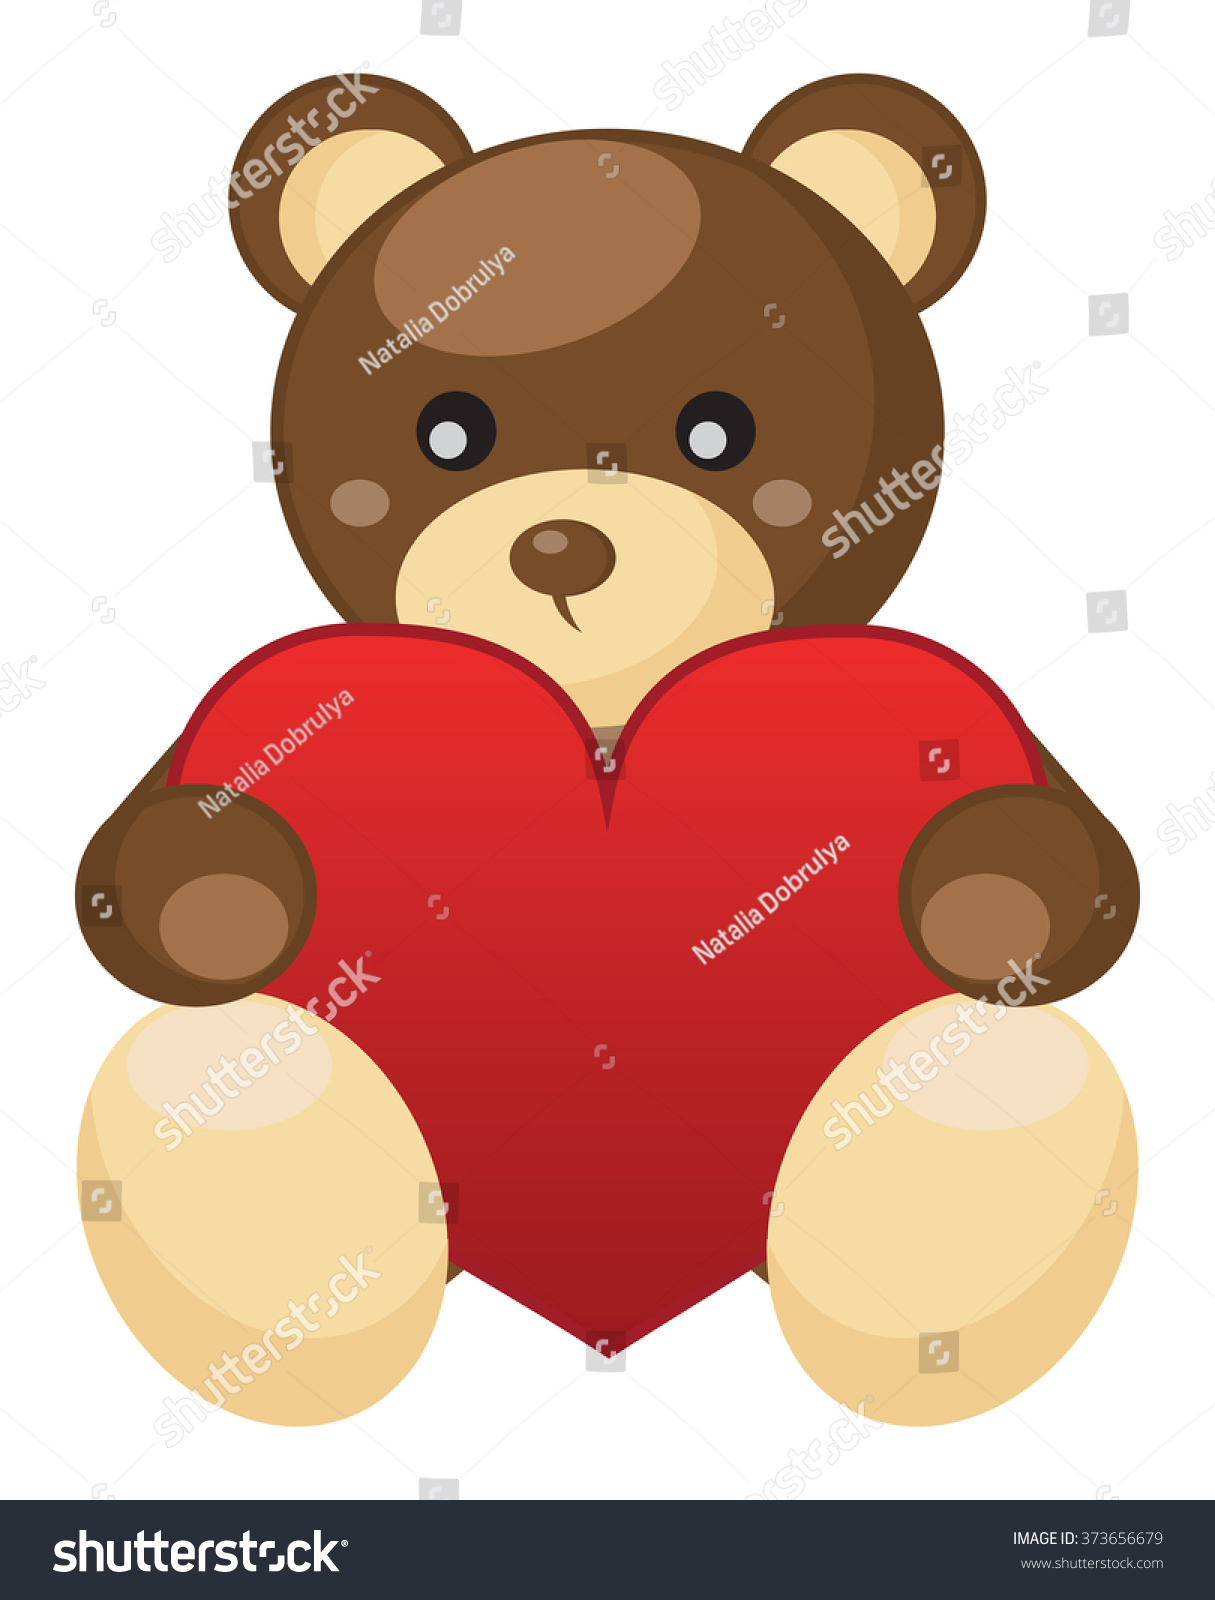 Cute Teddy Bear Holding Heart Vector Stock Vector 373656679 - Shutterstock